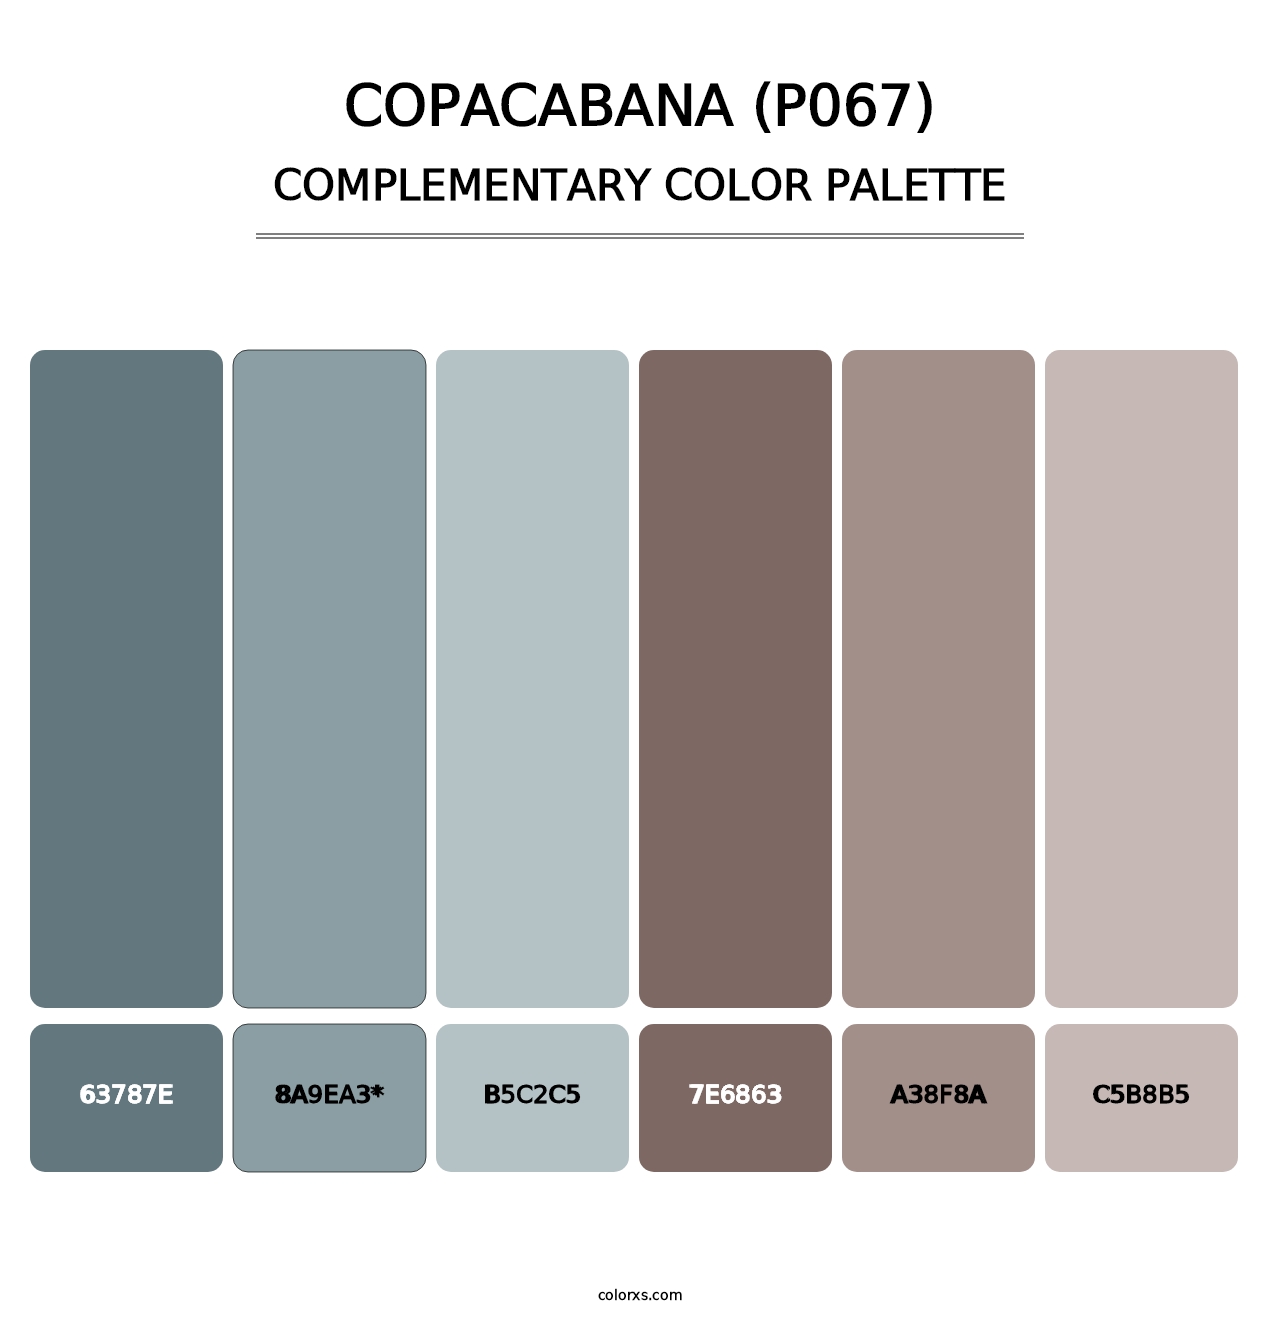 Copacabana (P067) - Complementary Color Palette